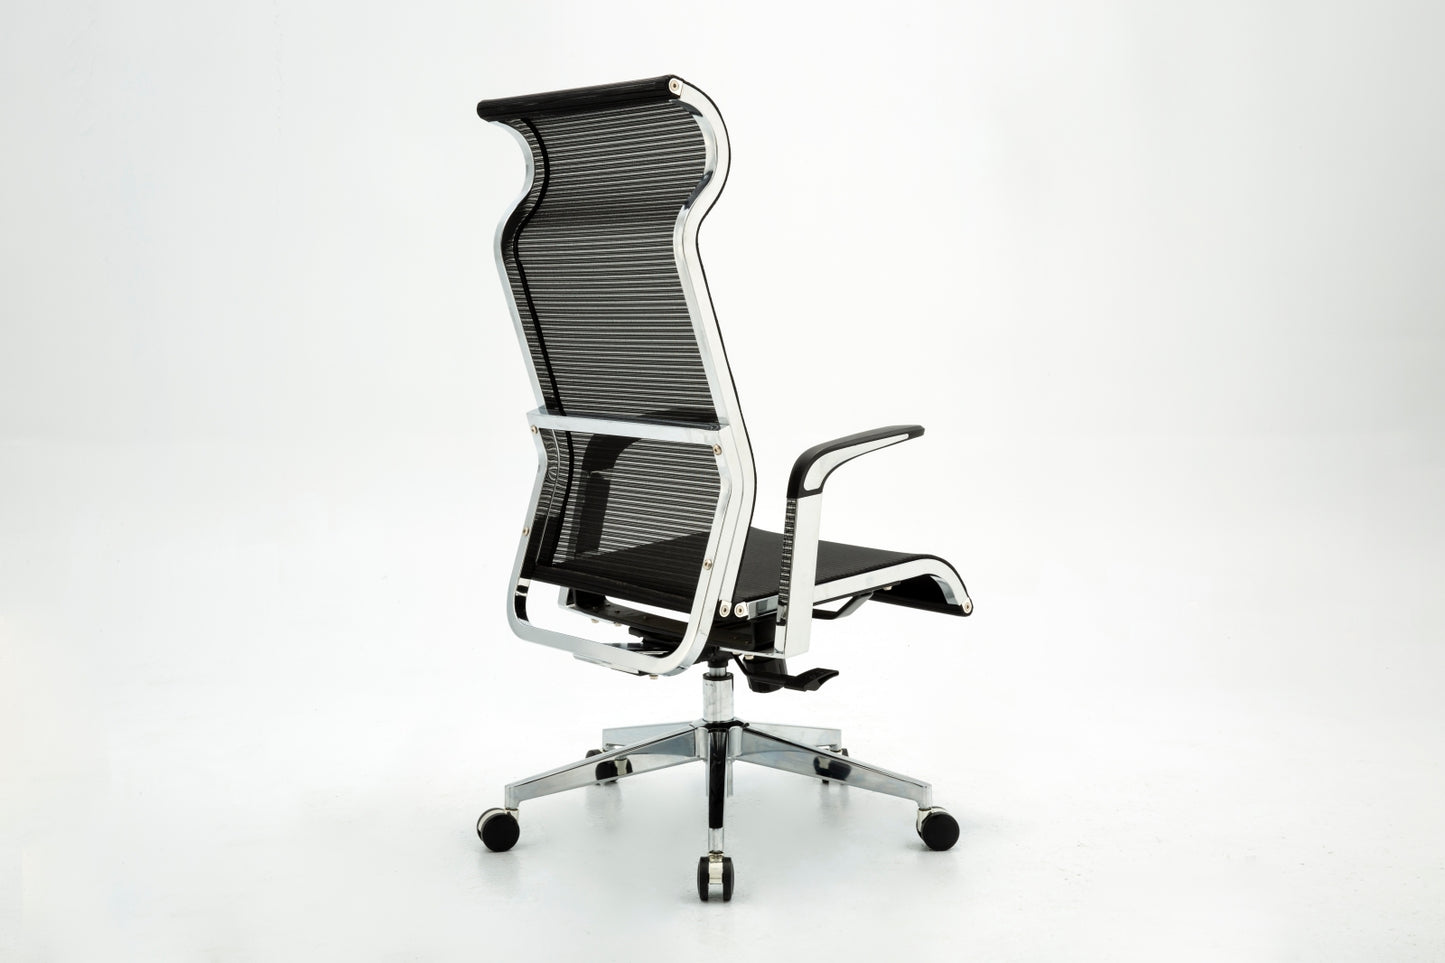 Sihoo X1 Ergonomic Chair